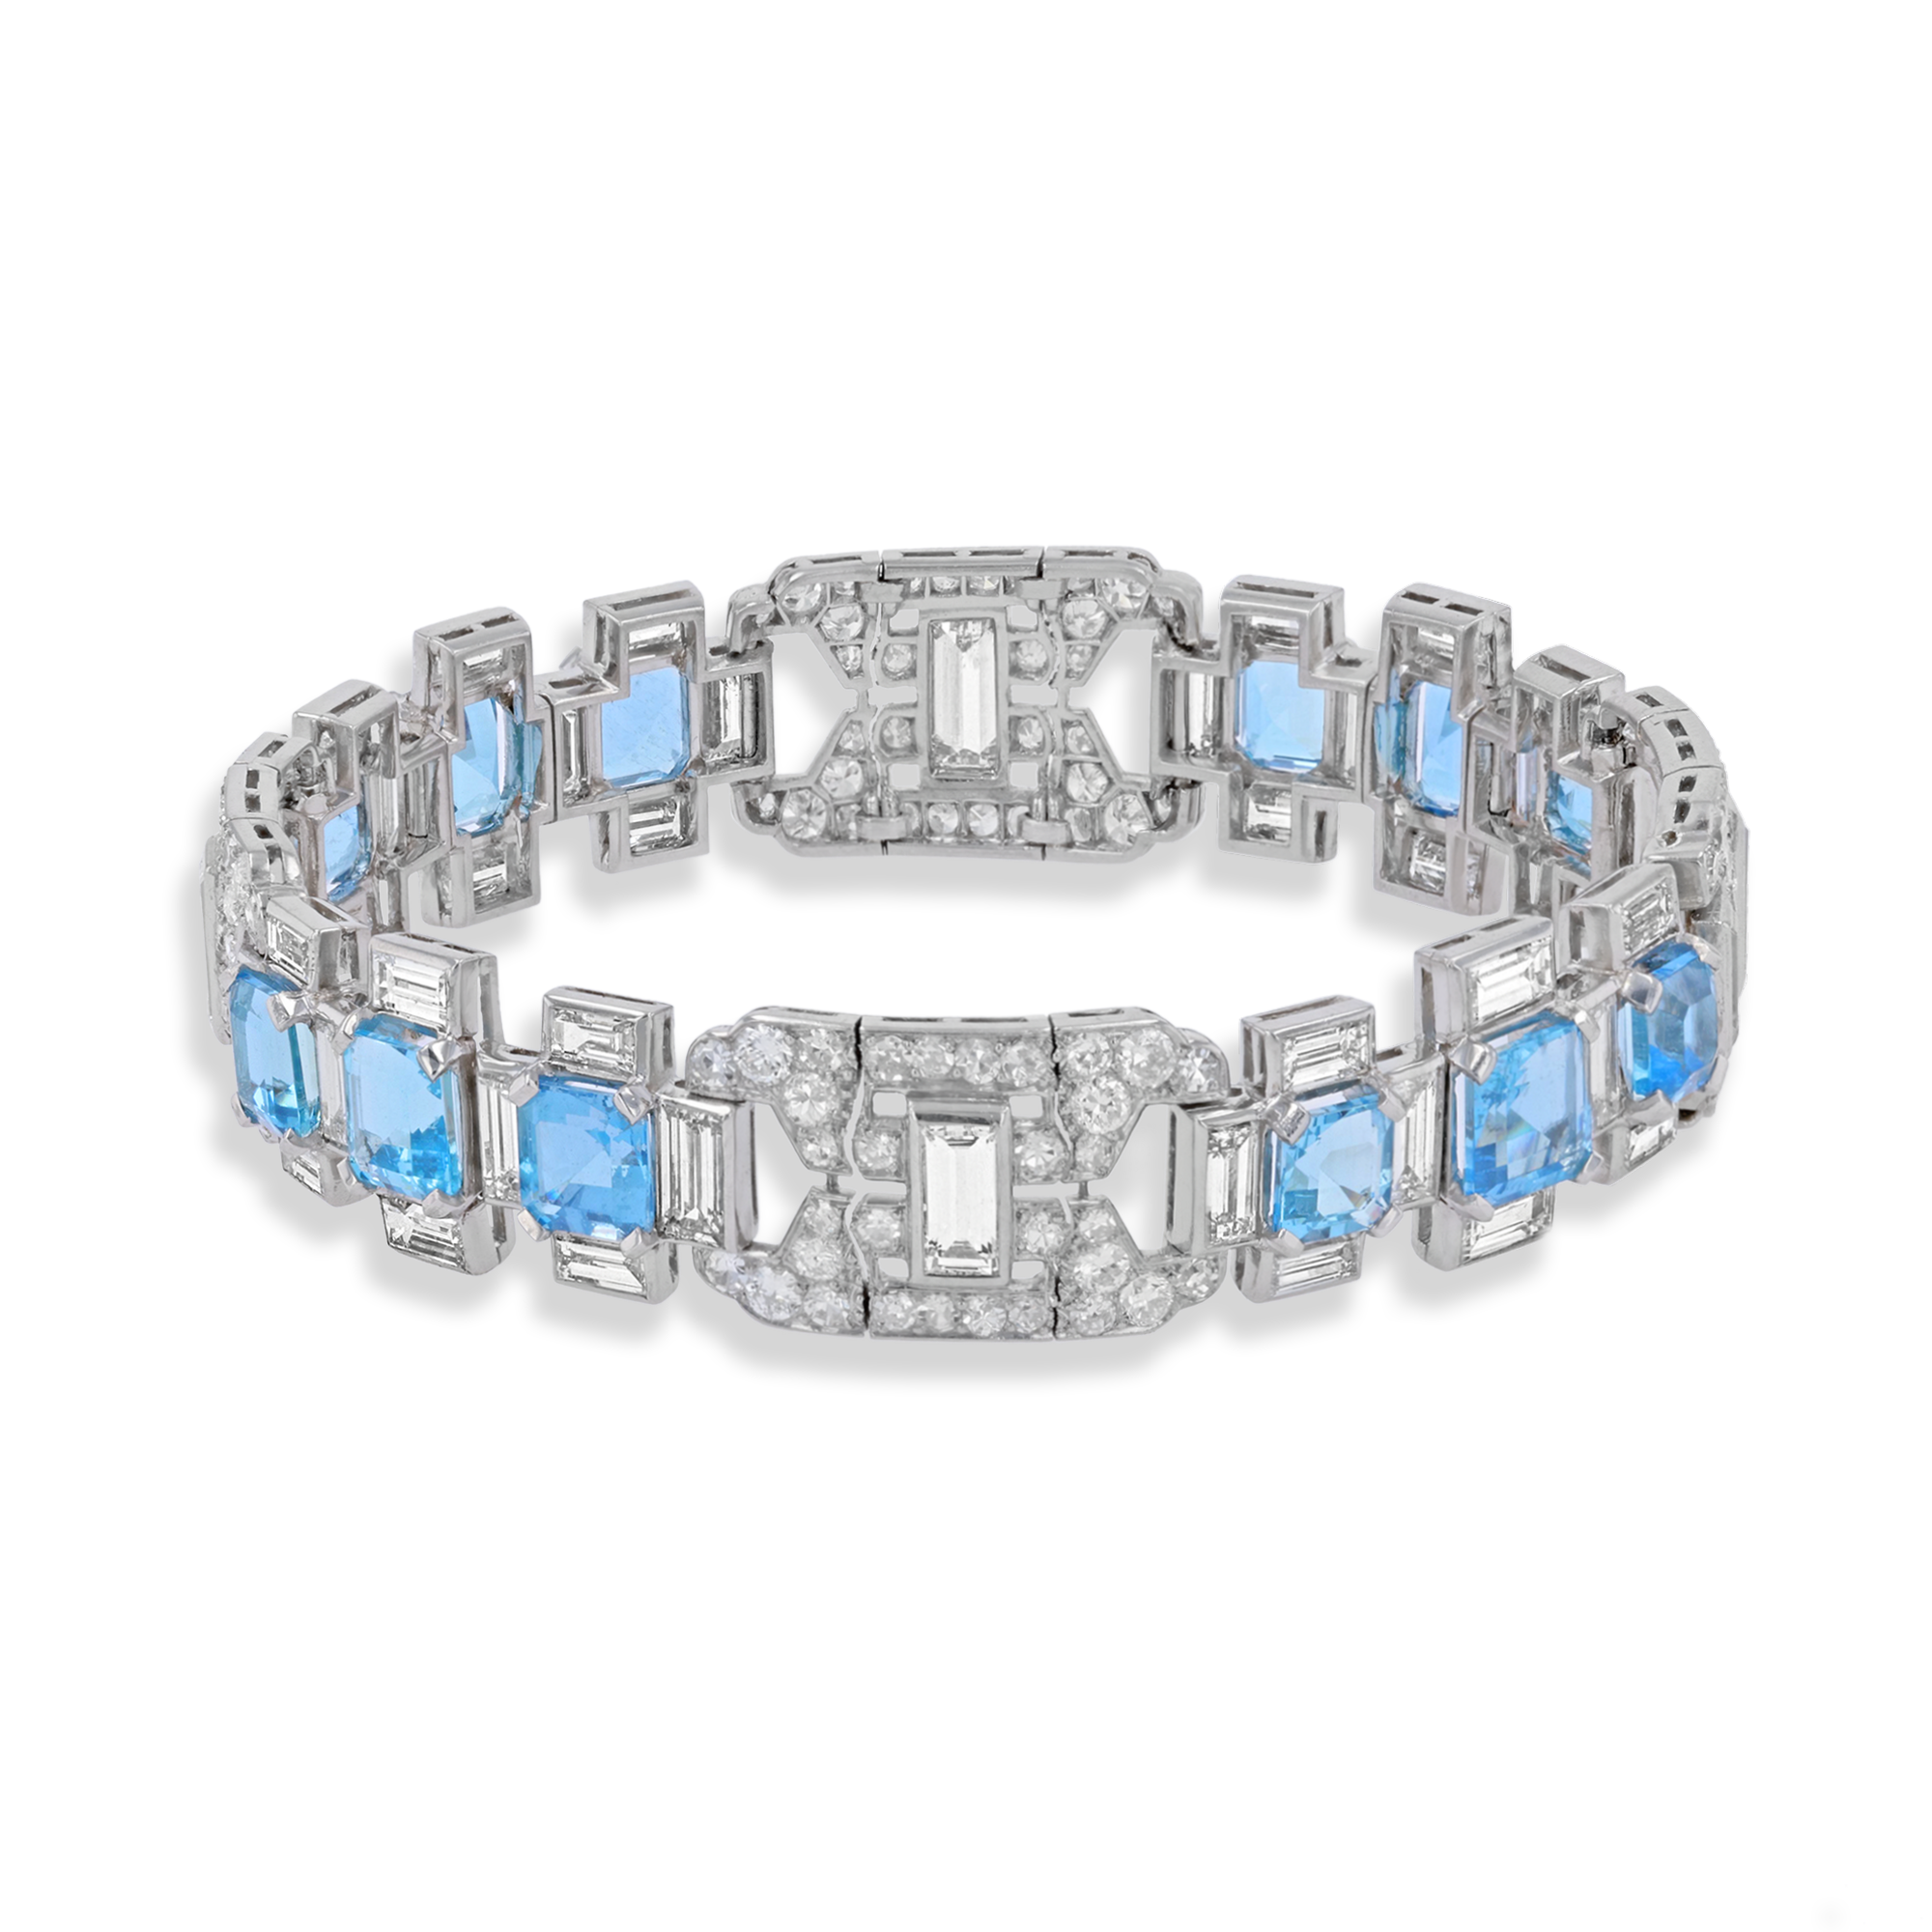 SYDNEY EVAN Dolphin 14-karat gold, aquamarine and diamond bracelet |  NET-A-PORTER